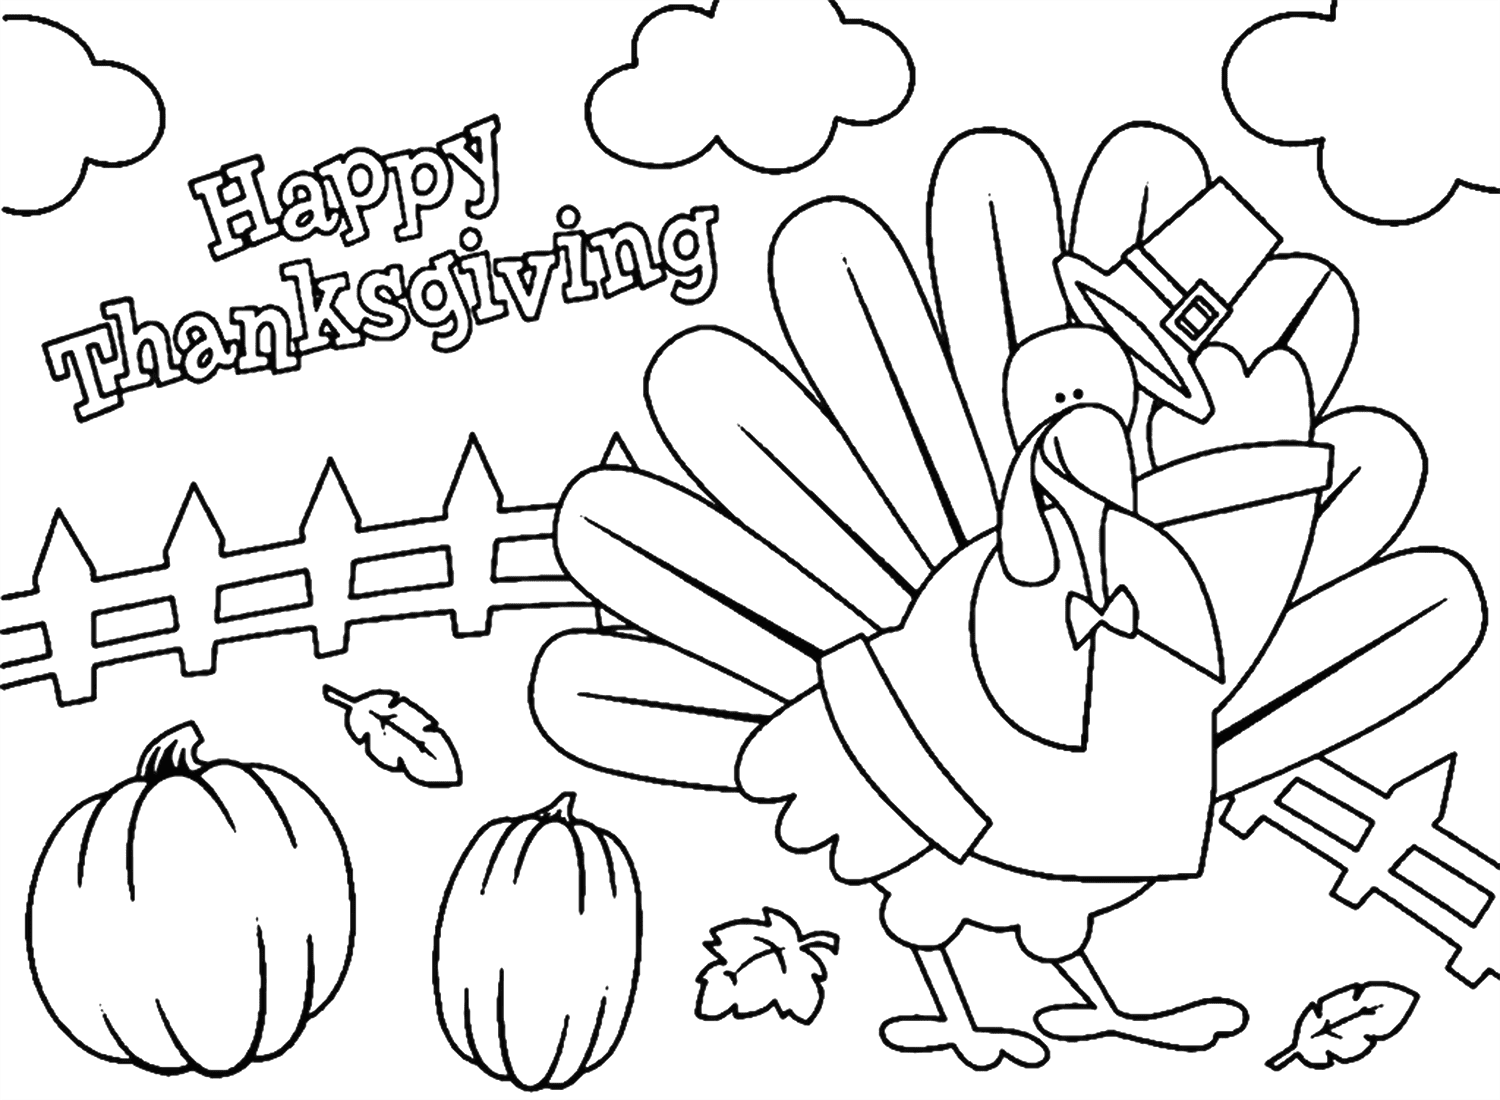 Joyeux Thanksgiving – novembre à partir de novembre